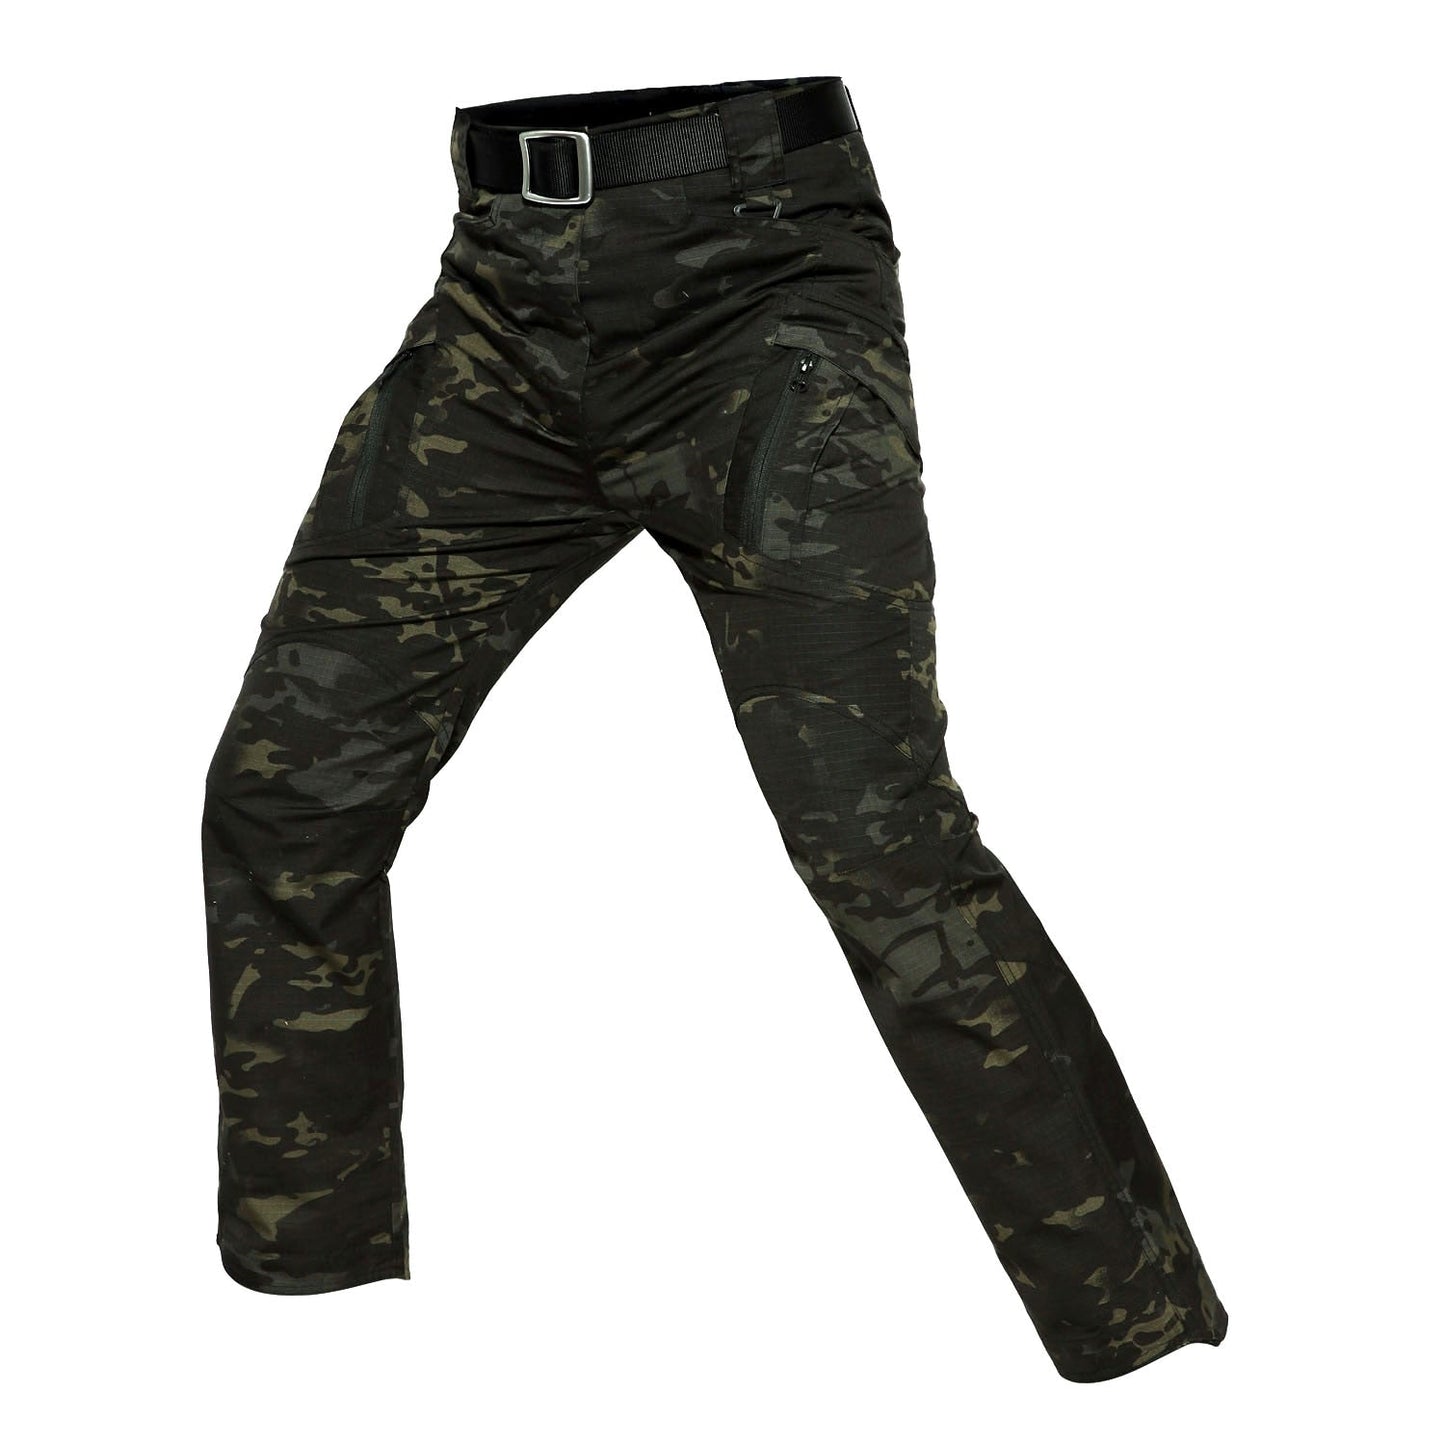 S / Black camouflage vik men's cargo pants 5:100014064;14:203008818#Black camouflage;200007763:201336100